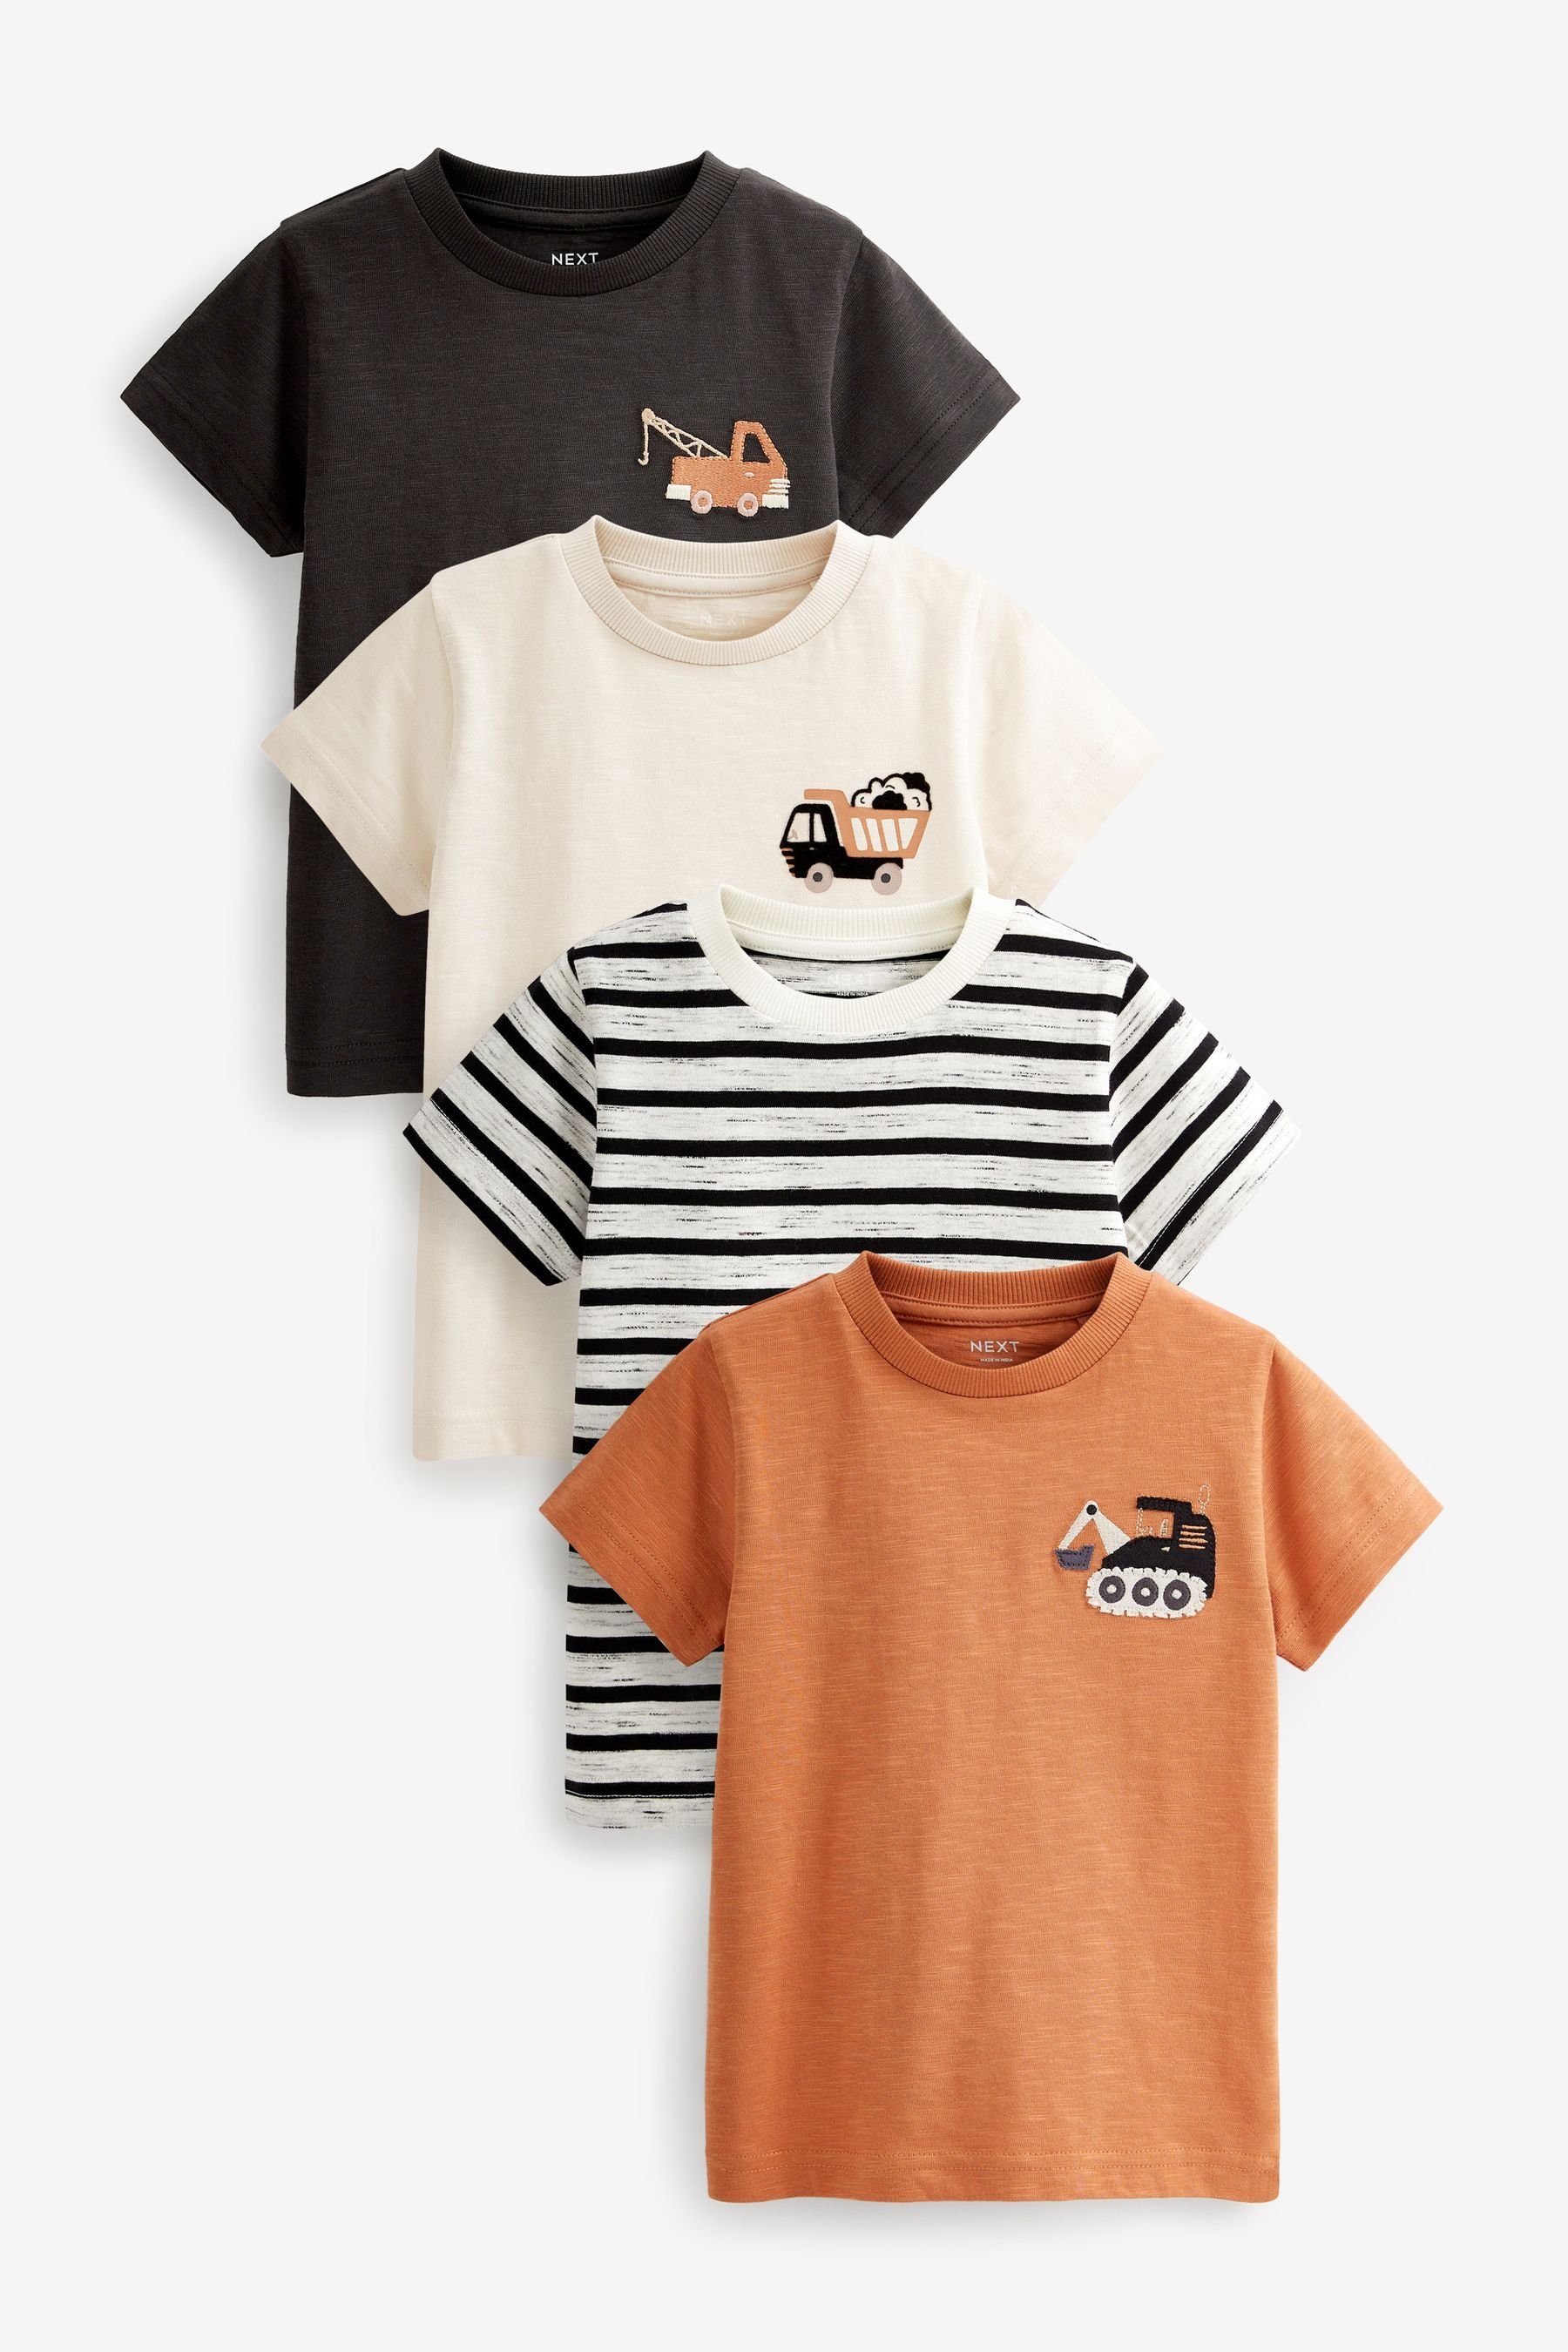 Next T-Shirt Kurzärmelige T-Shirts mit Figurenmotiv, 4er-Pack (4-tlg) Monochrome